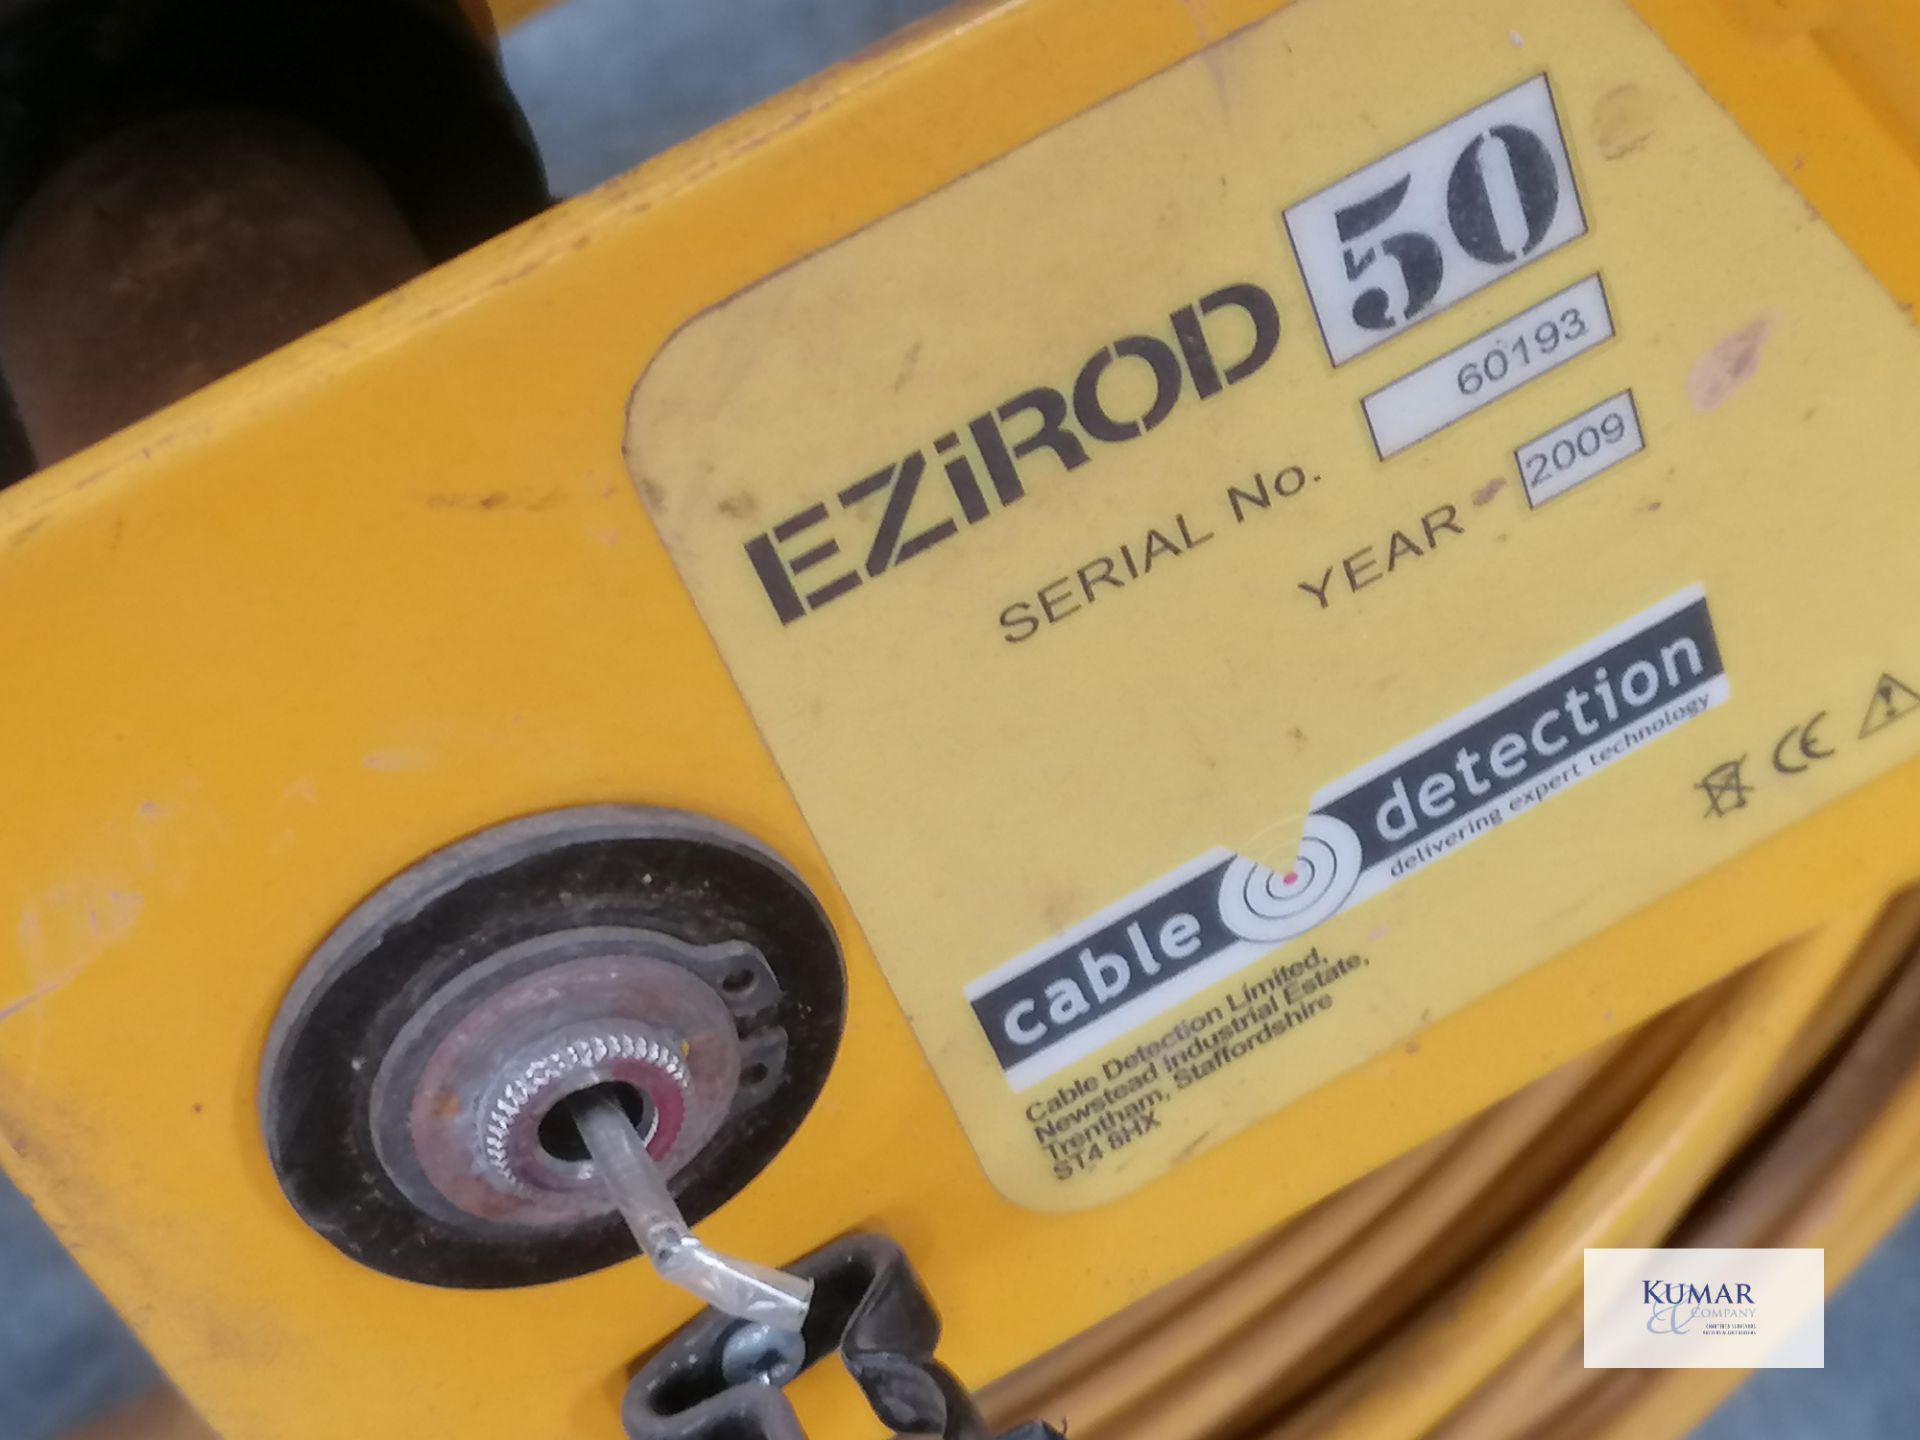 2 x EZiROD 50 Flexible Tracing Rod Serial No 60193/94 - Image 3 of 4